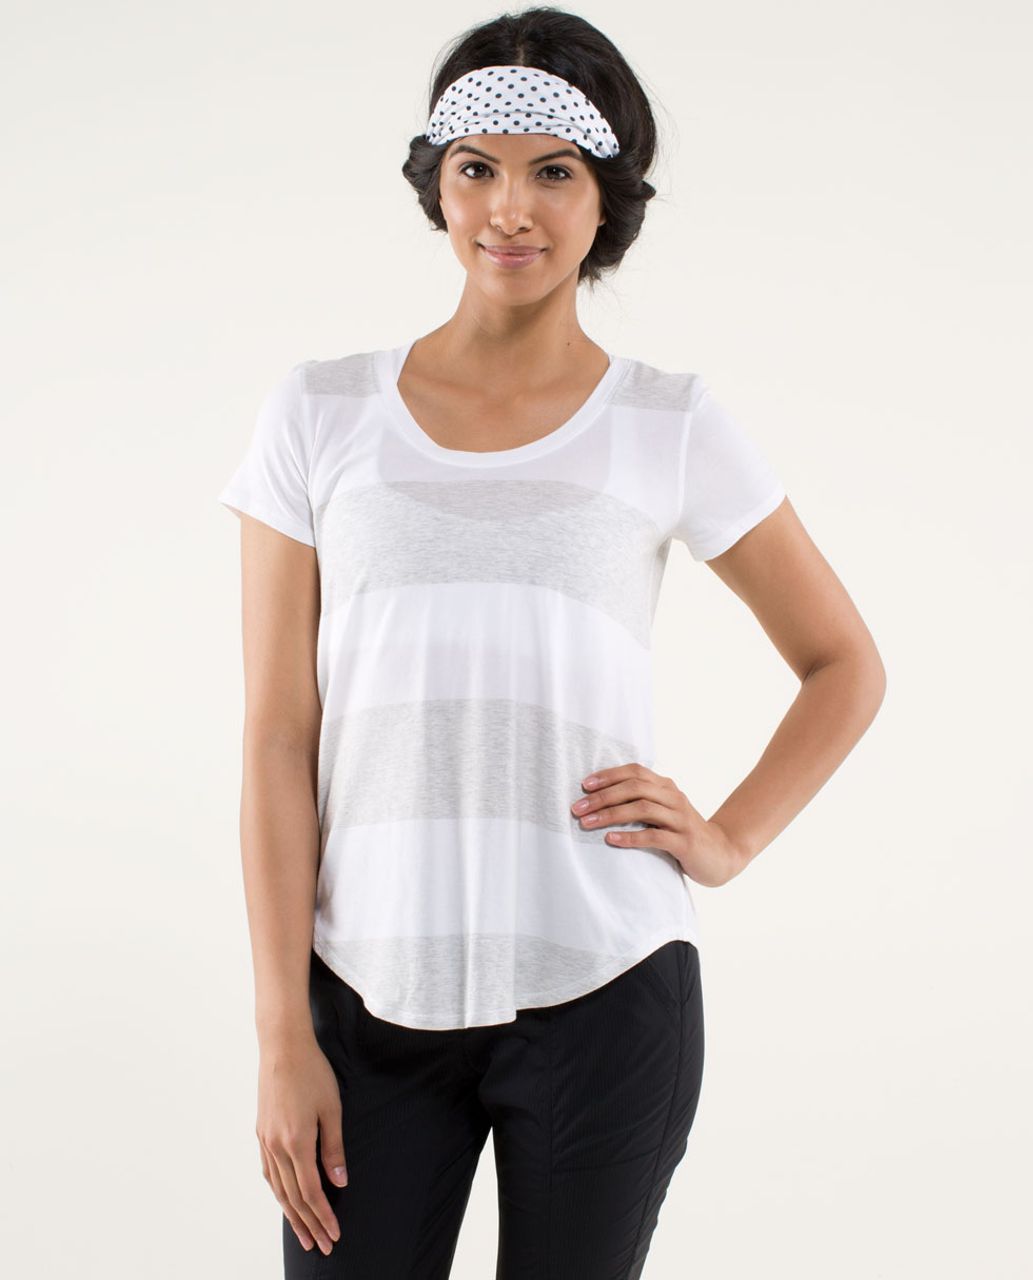 Ivivva Lululemon Girls Grey and White Striped Short Sleeve Shirt - Size 10